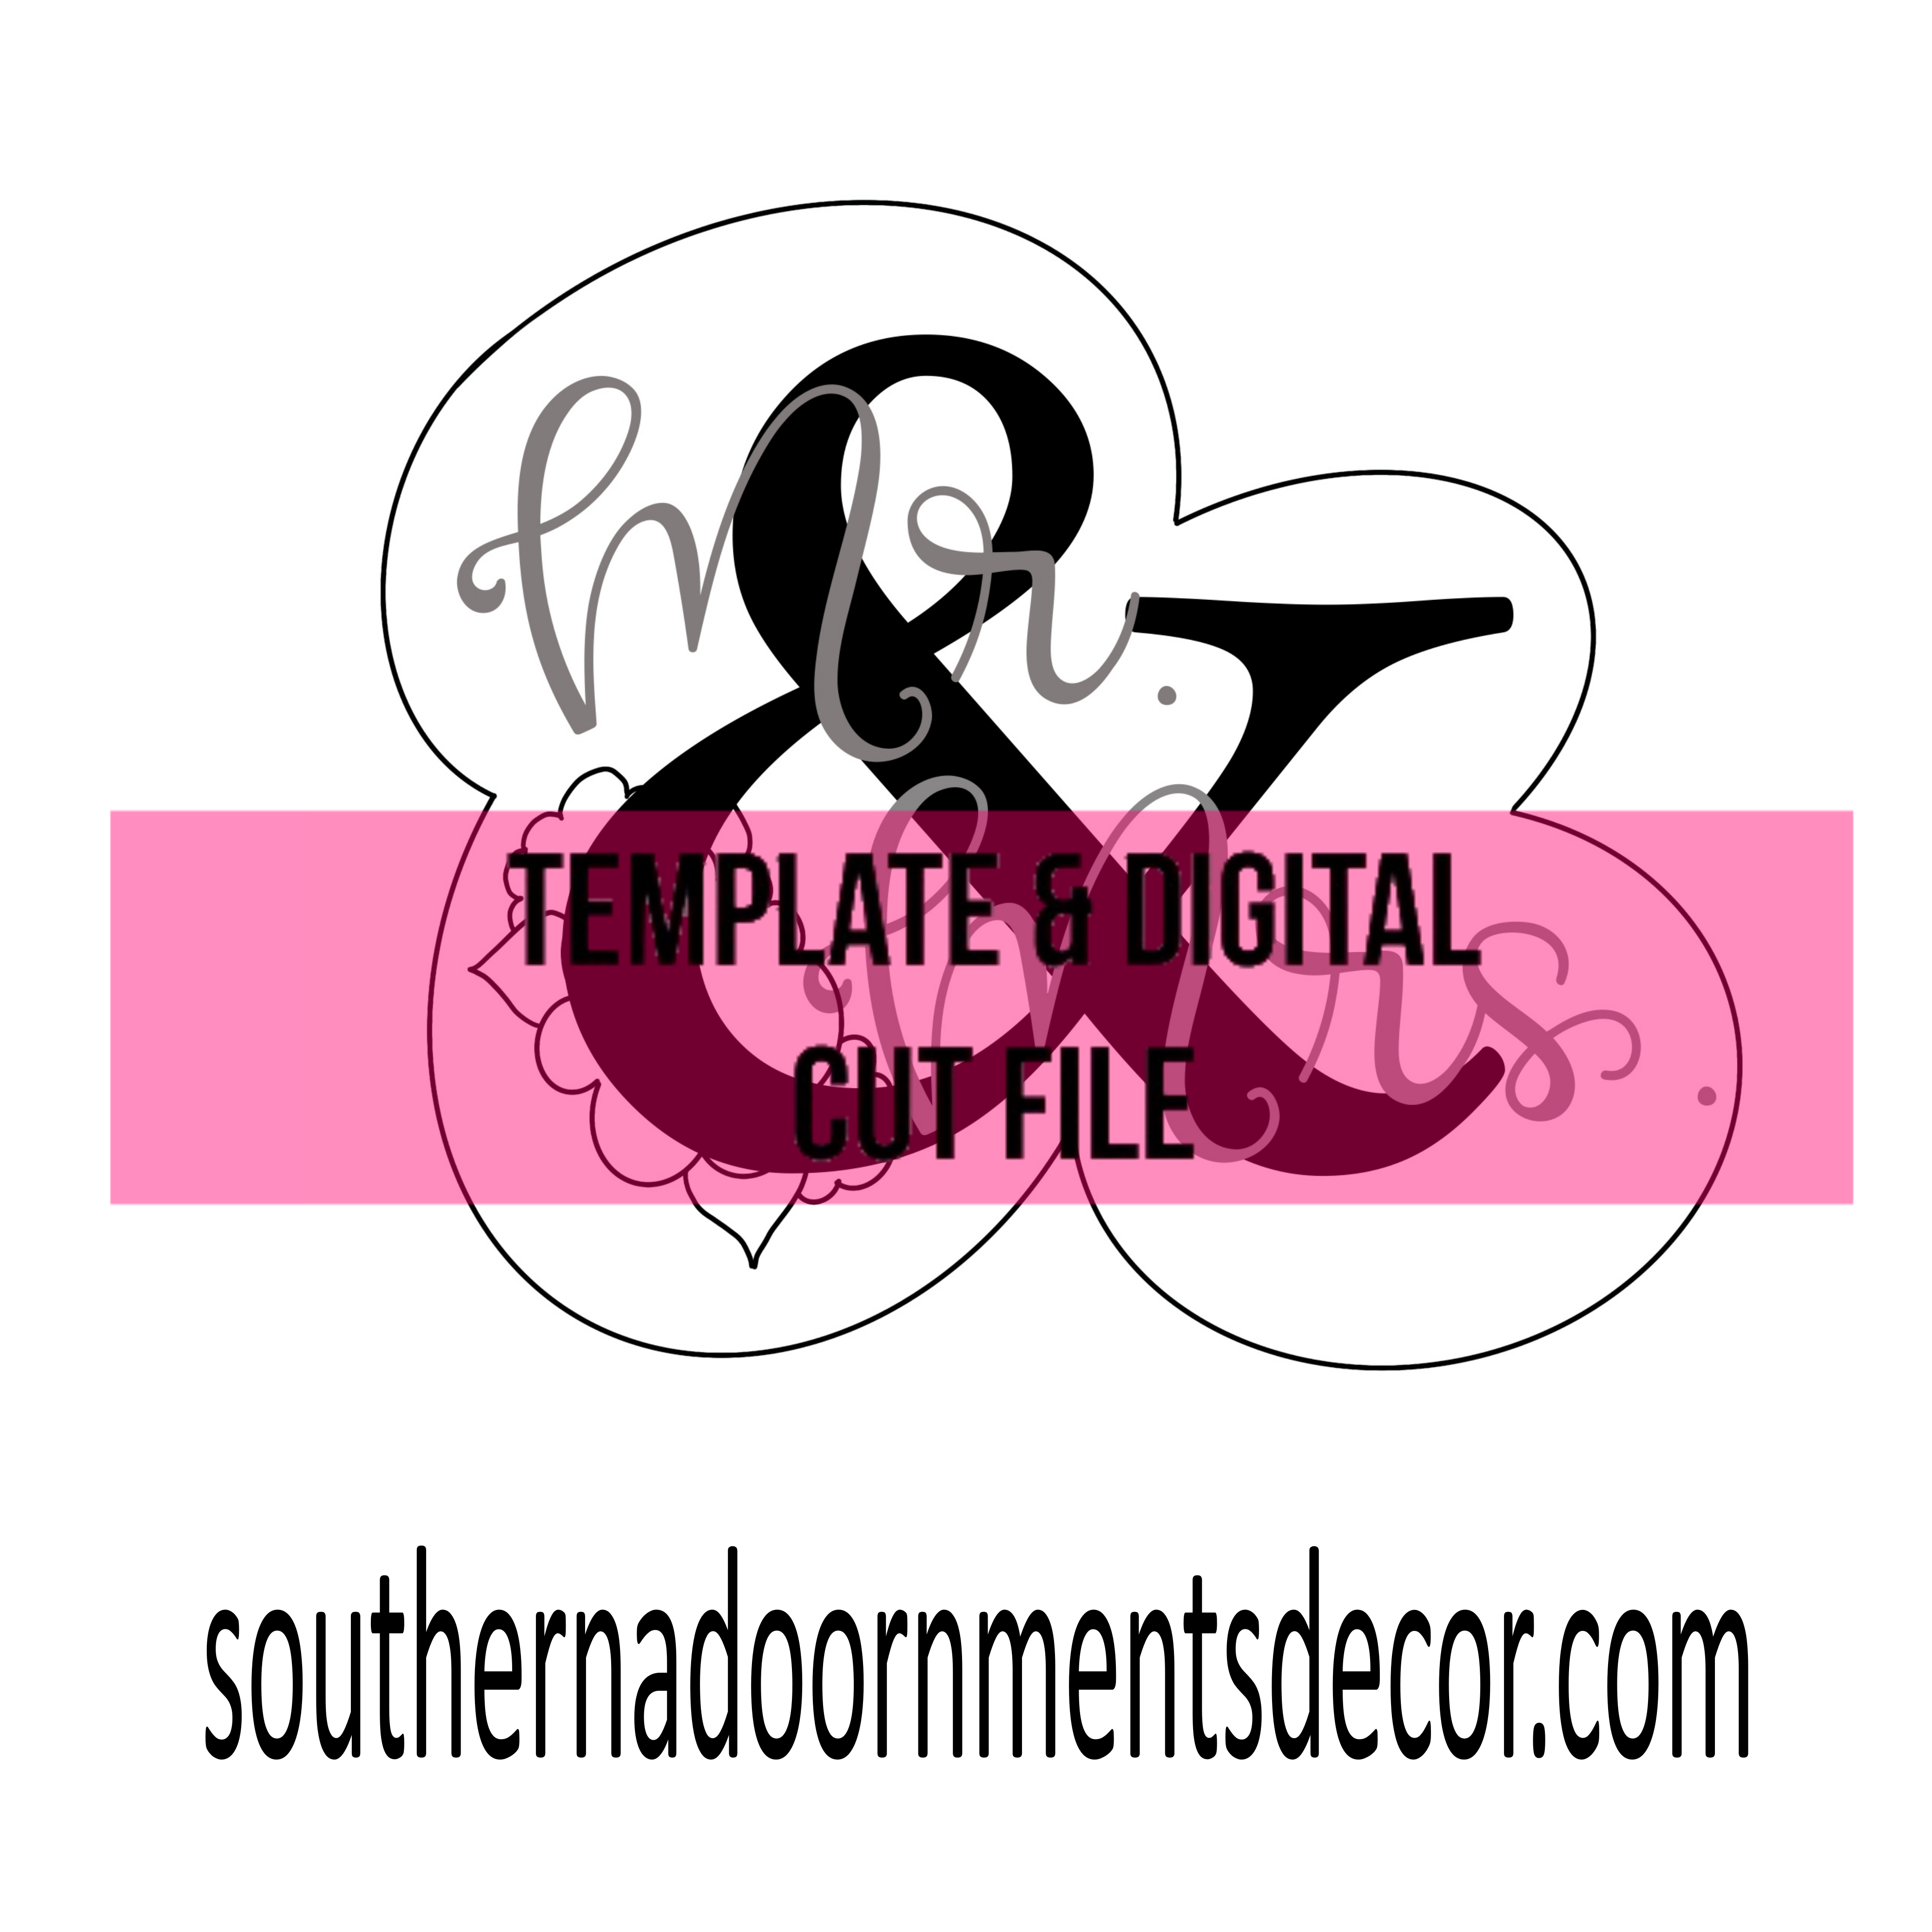 Mr. and Mrs. Template & Digital Cut File